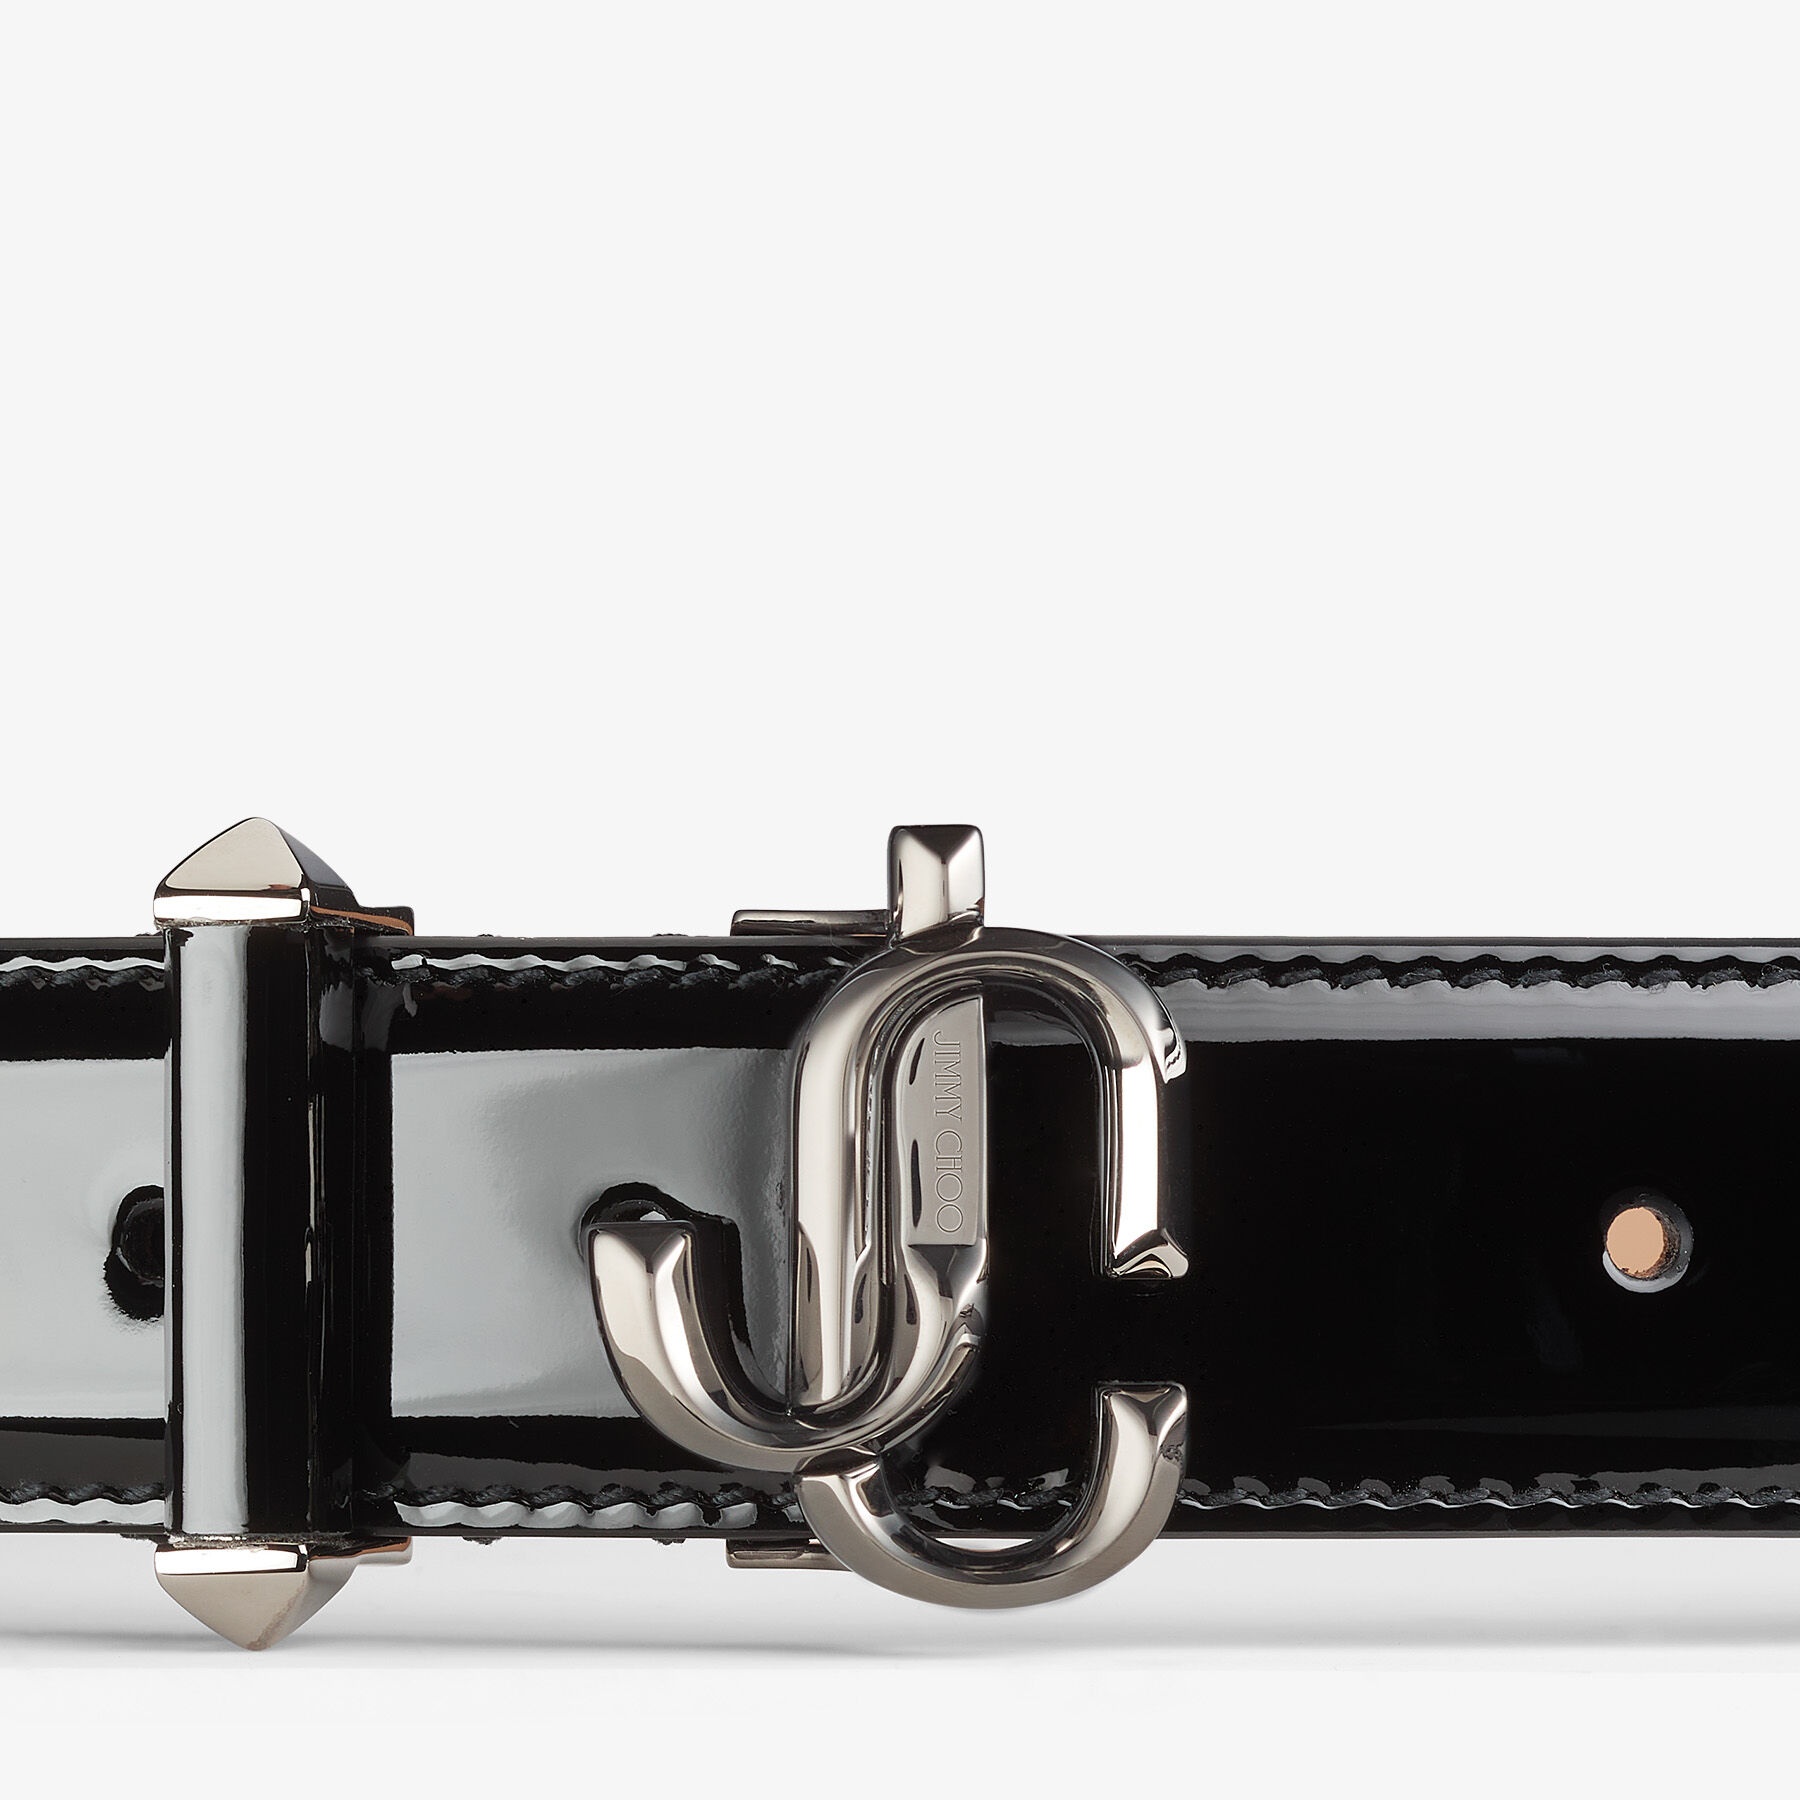 Jc-bar Blt
Black Patent Leather Bar Belt with JC Emblem - 2